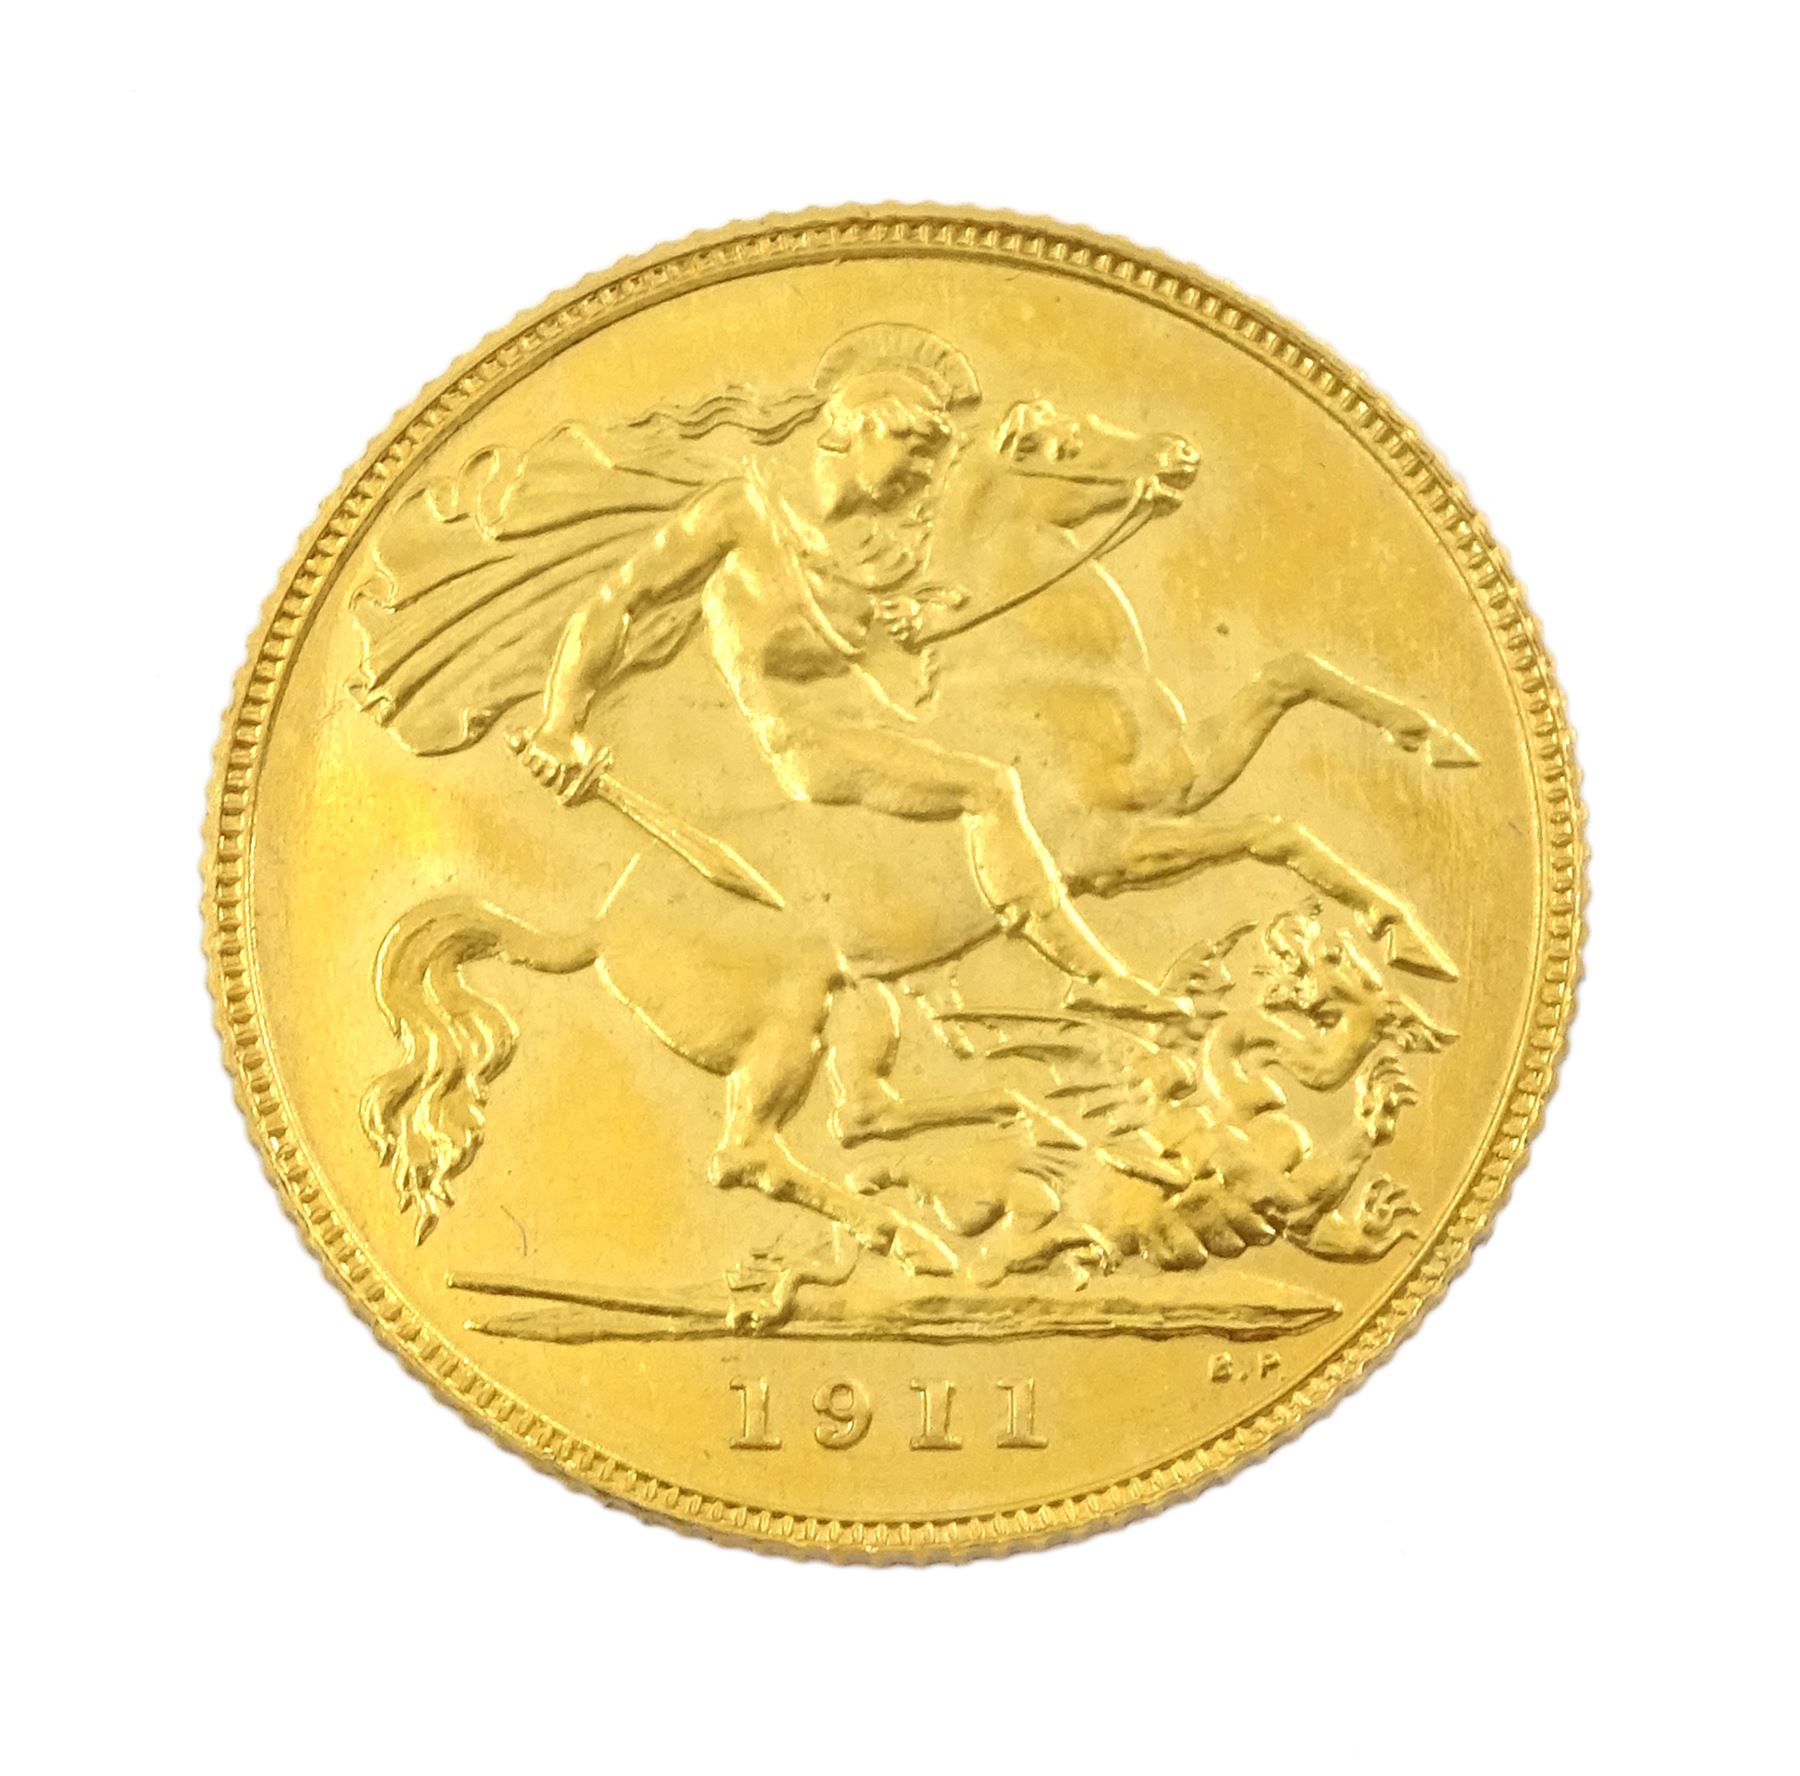 King George V 1911 proof long coin set - Image 11 of 28